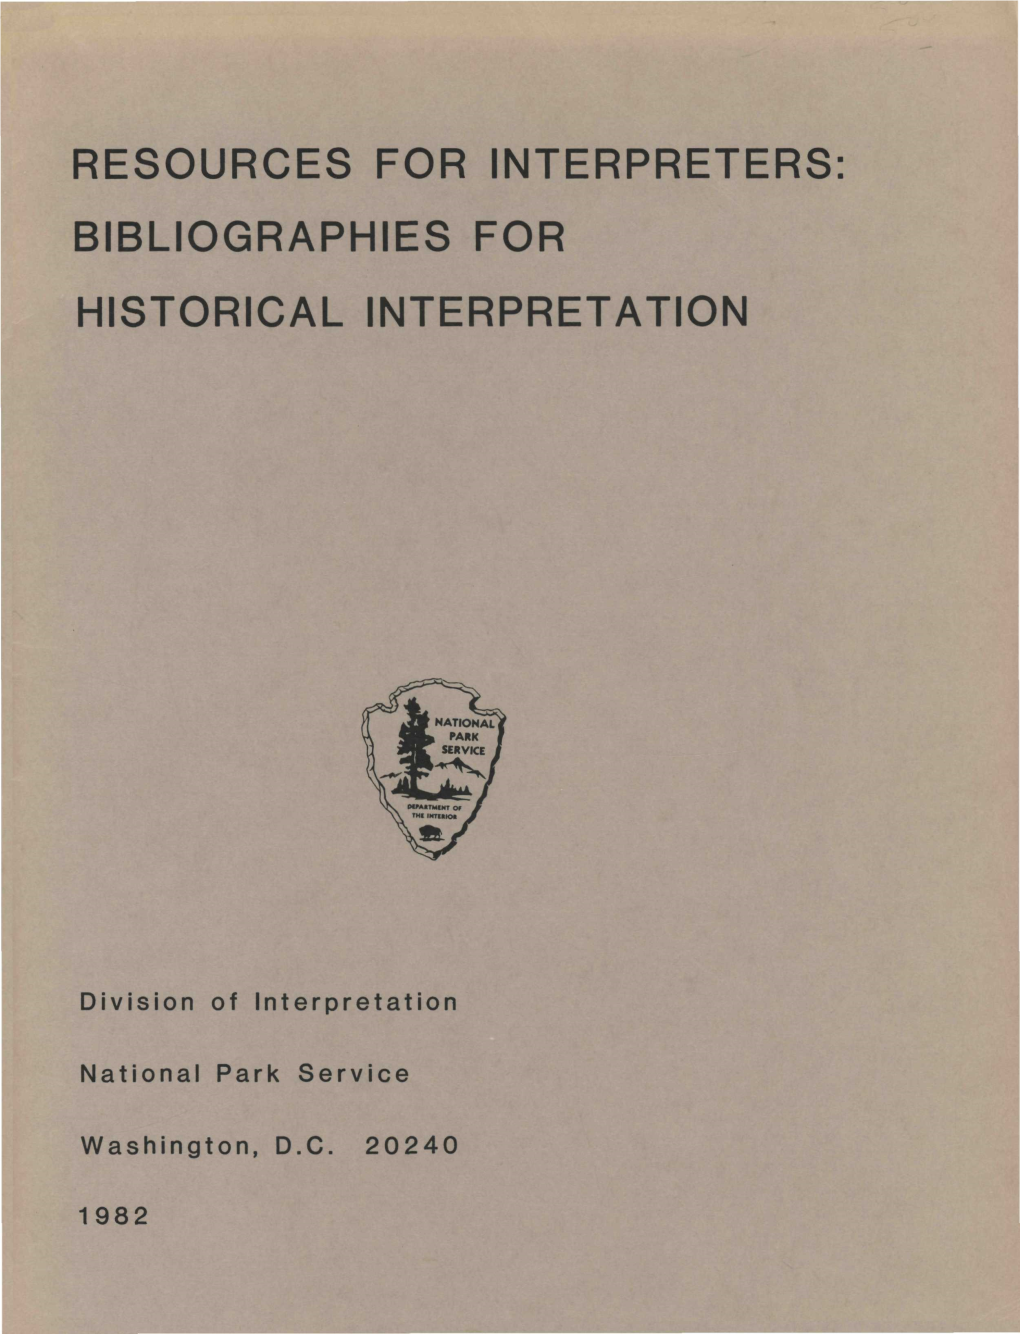 Resources for Interpreters: Bibliographies for Historical Interpretation